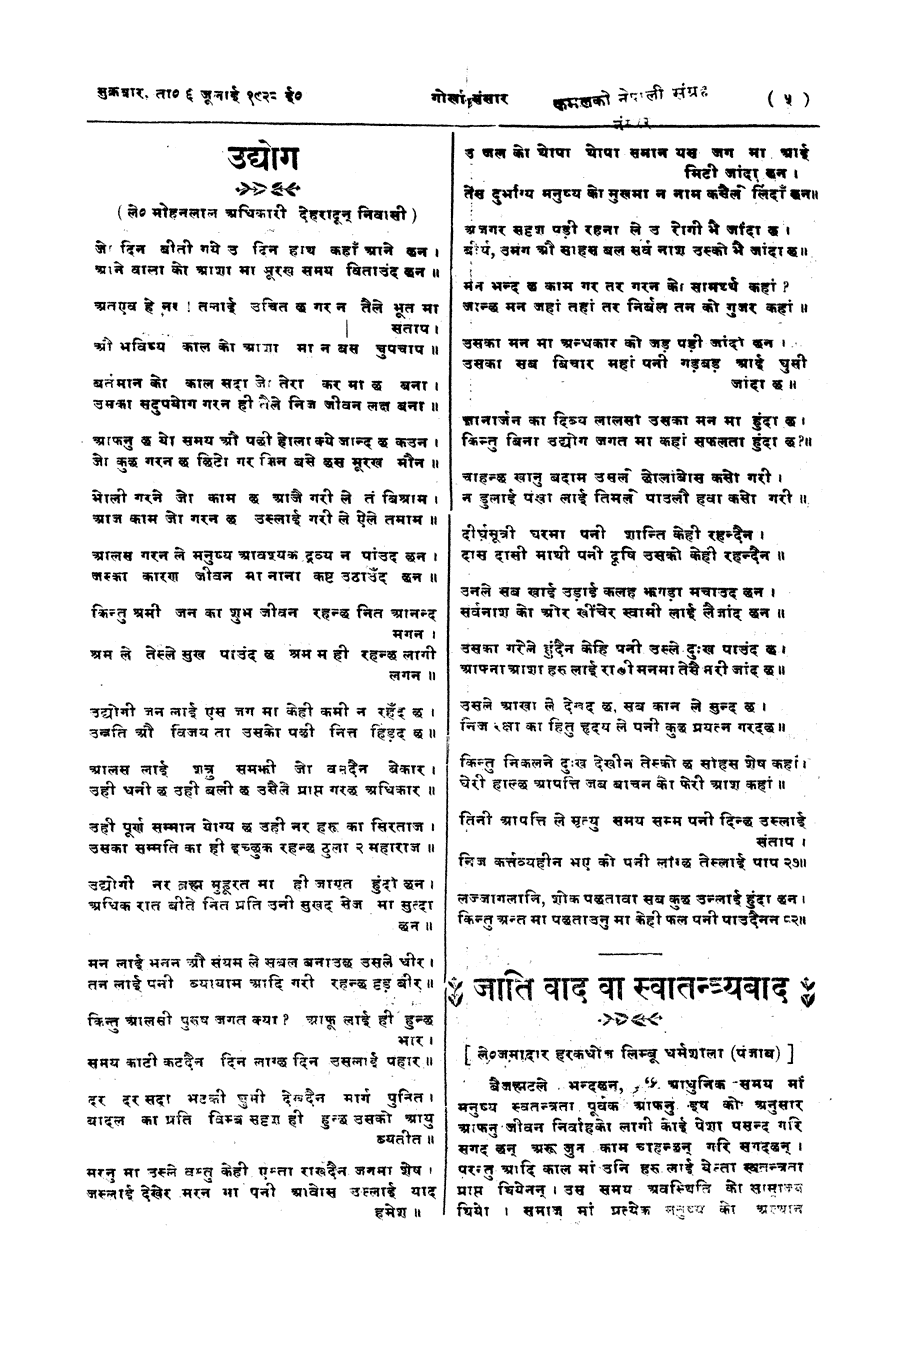 Gorkha Sansar, 6 July 1928, page 5